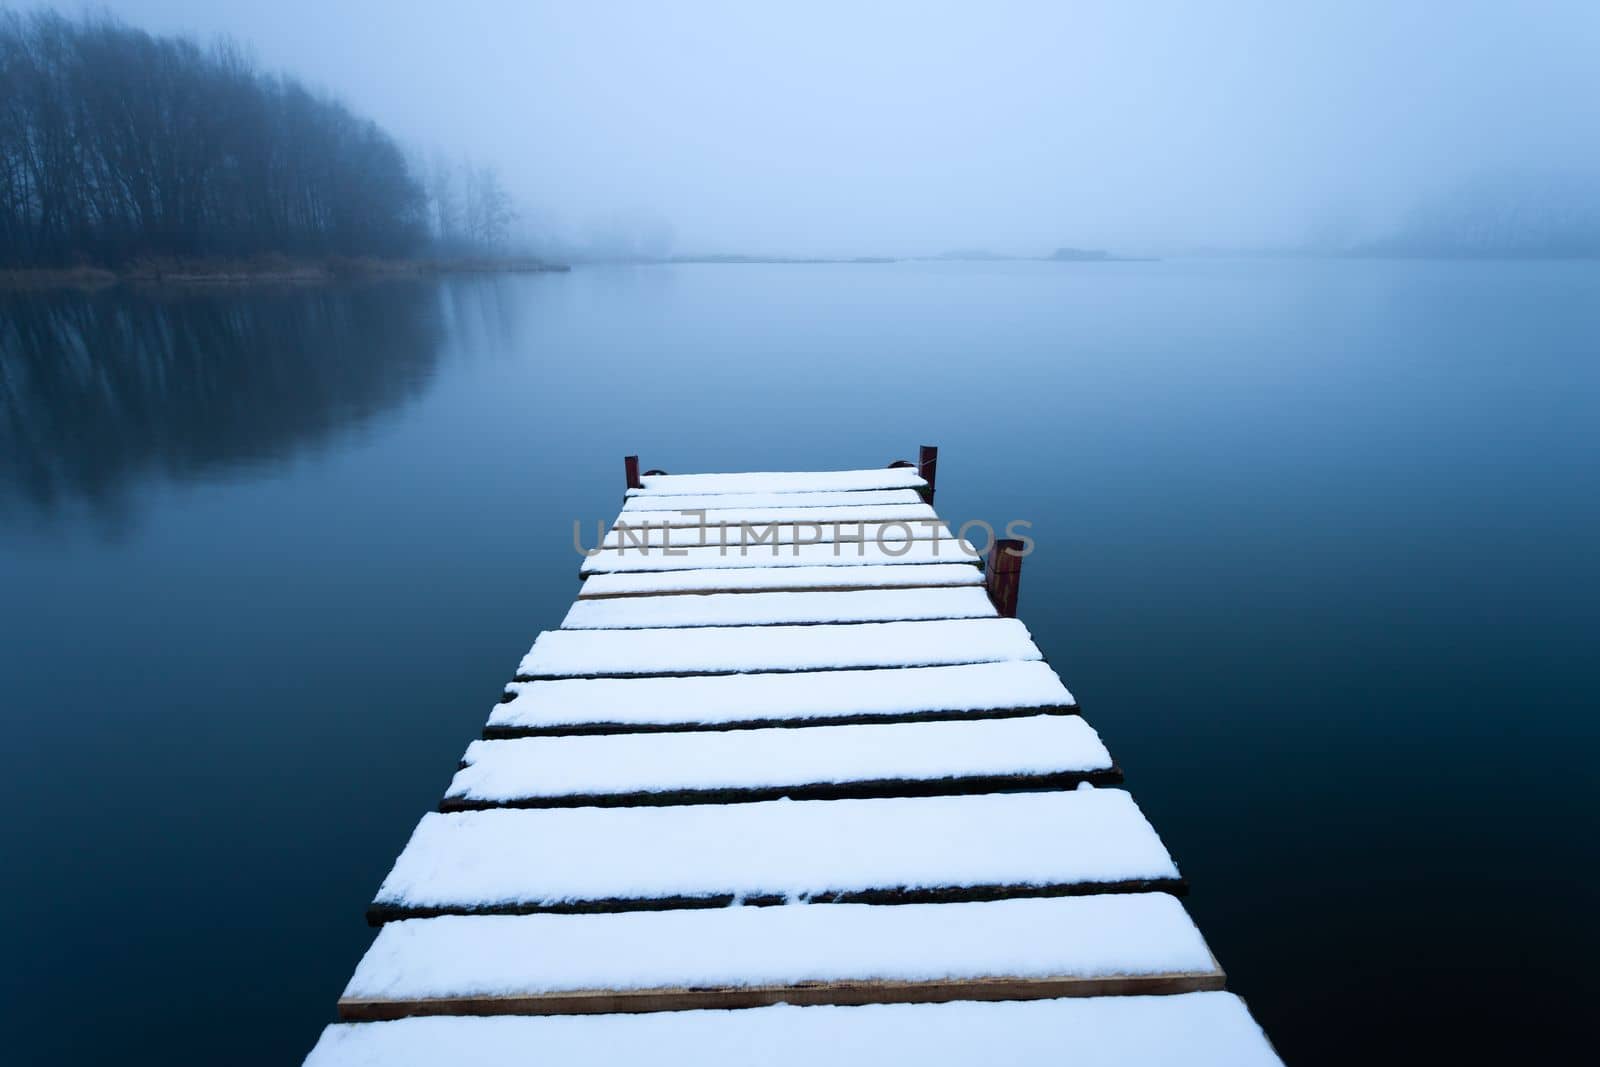 Snow on the pier and foggy lake, Stankow, Poland by darekb22